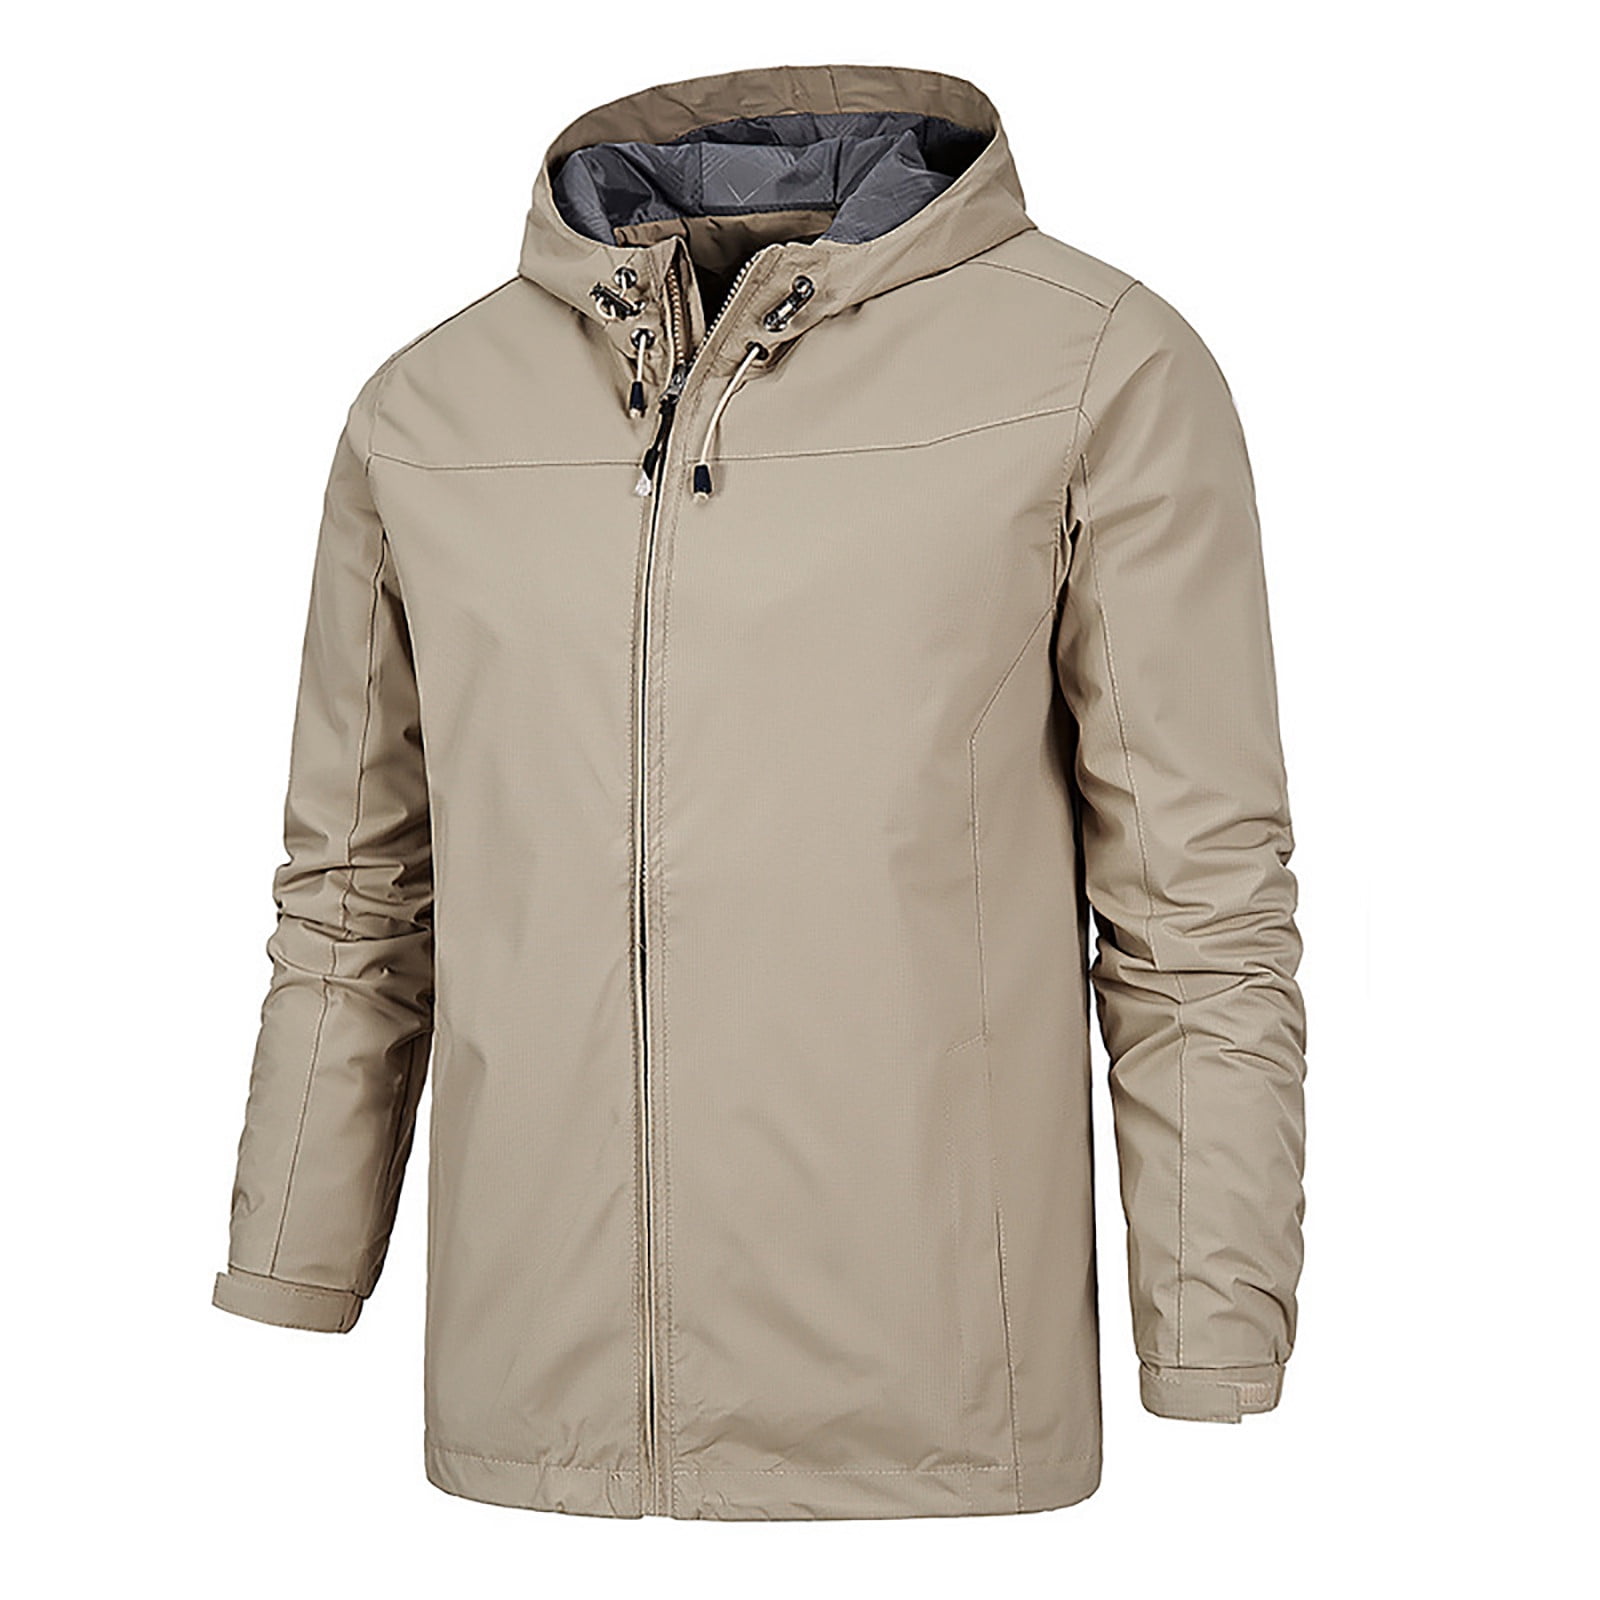 Mens Decathlon Quechua ski/snowboard jacket grey, size XL | eBay